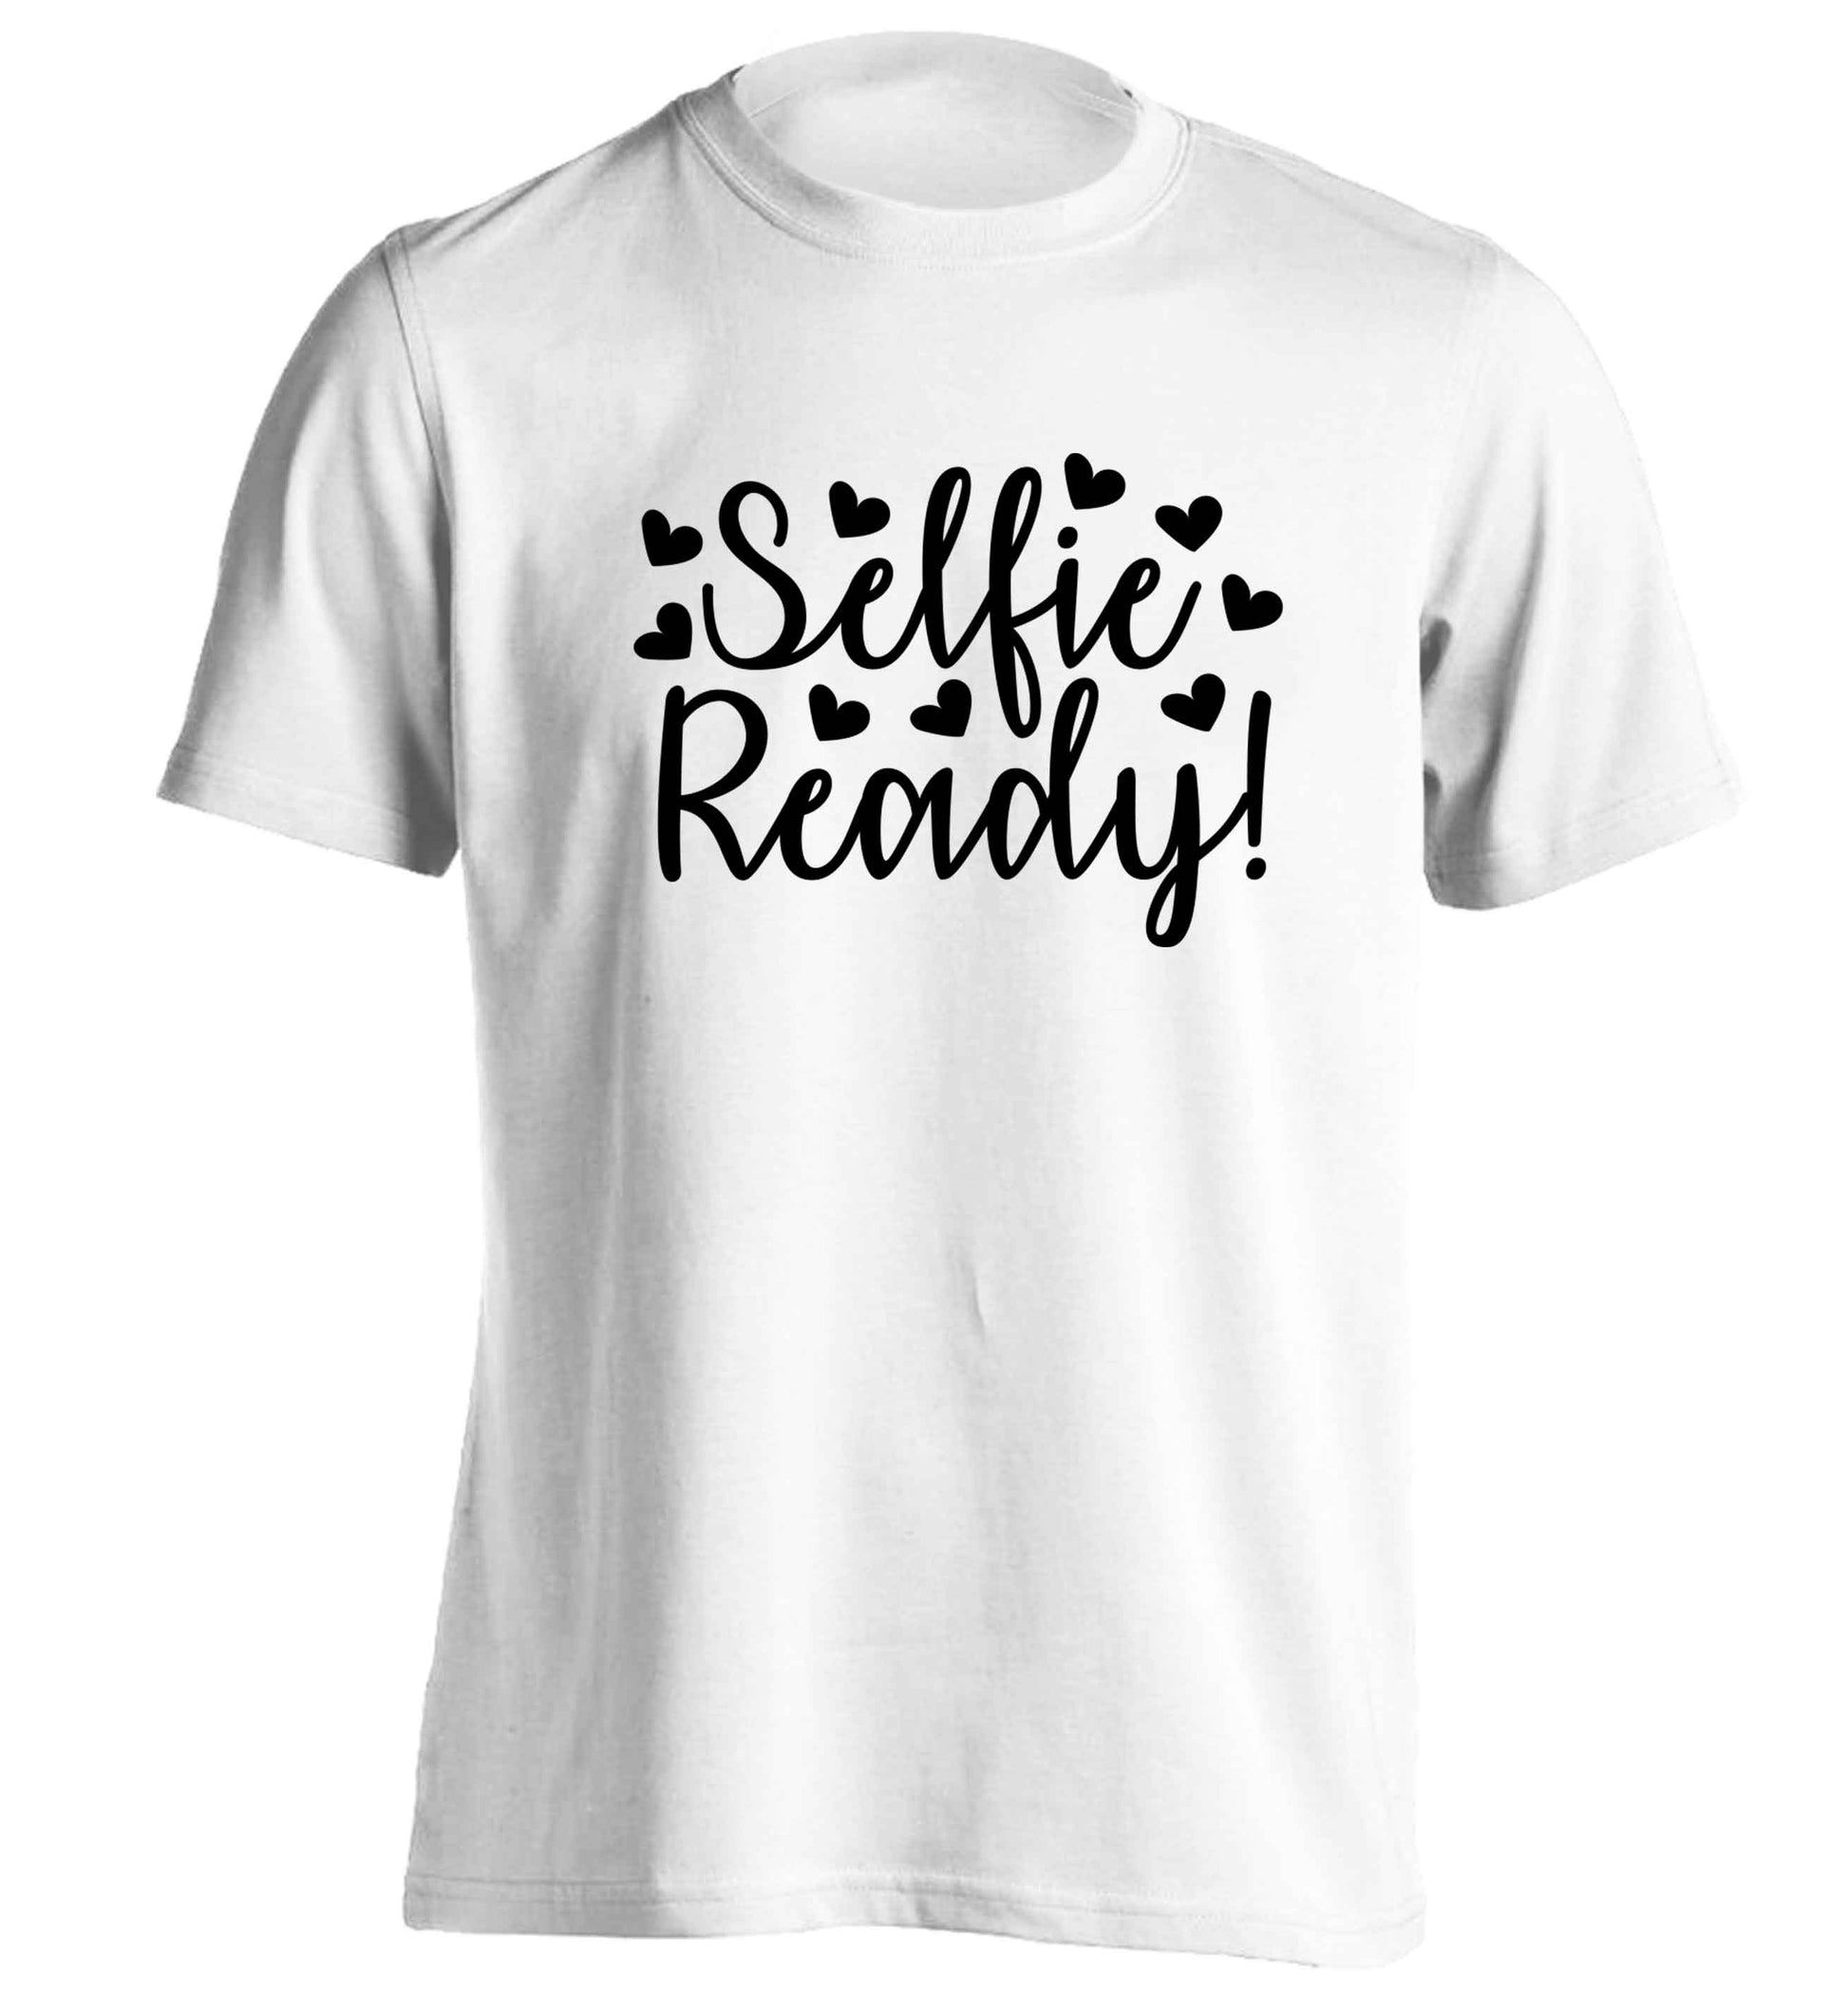 Selfie ready adults unisex white Tshirt 2XL